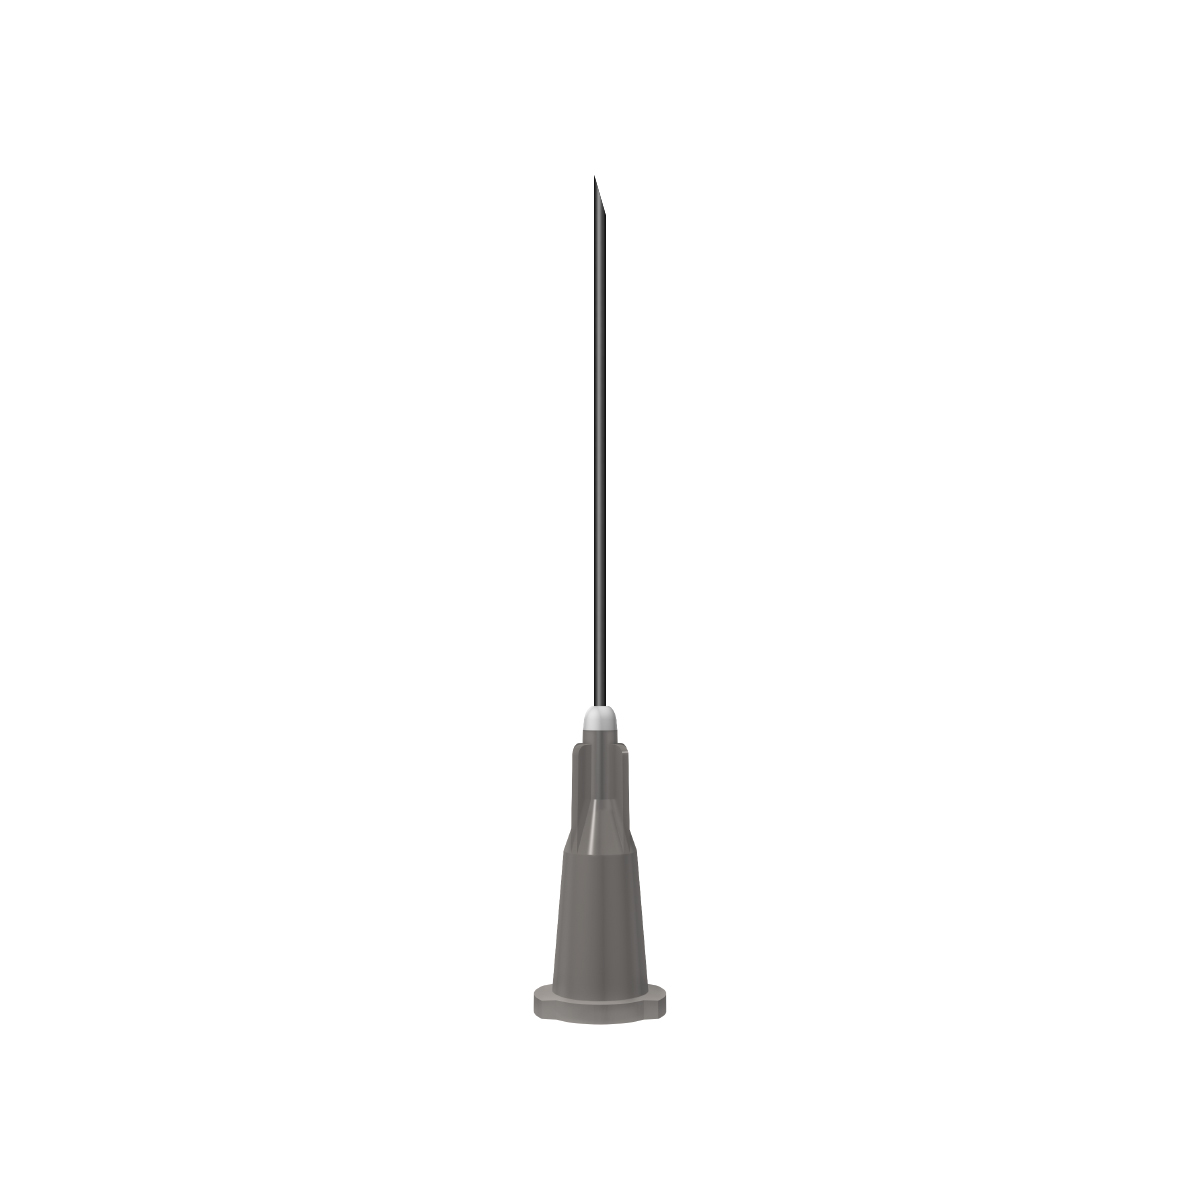 Terumo: Black 22G 32mm (1¼ inch) needle